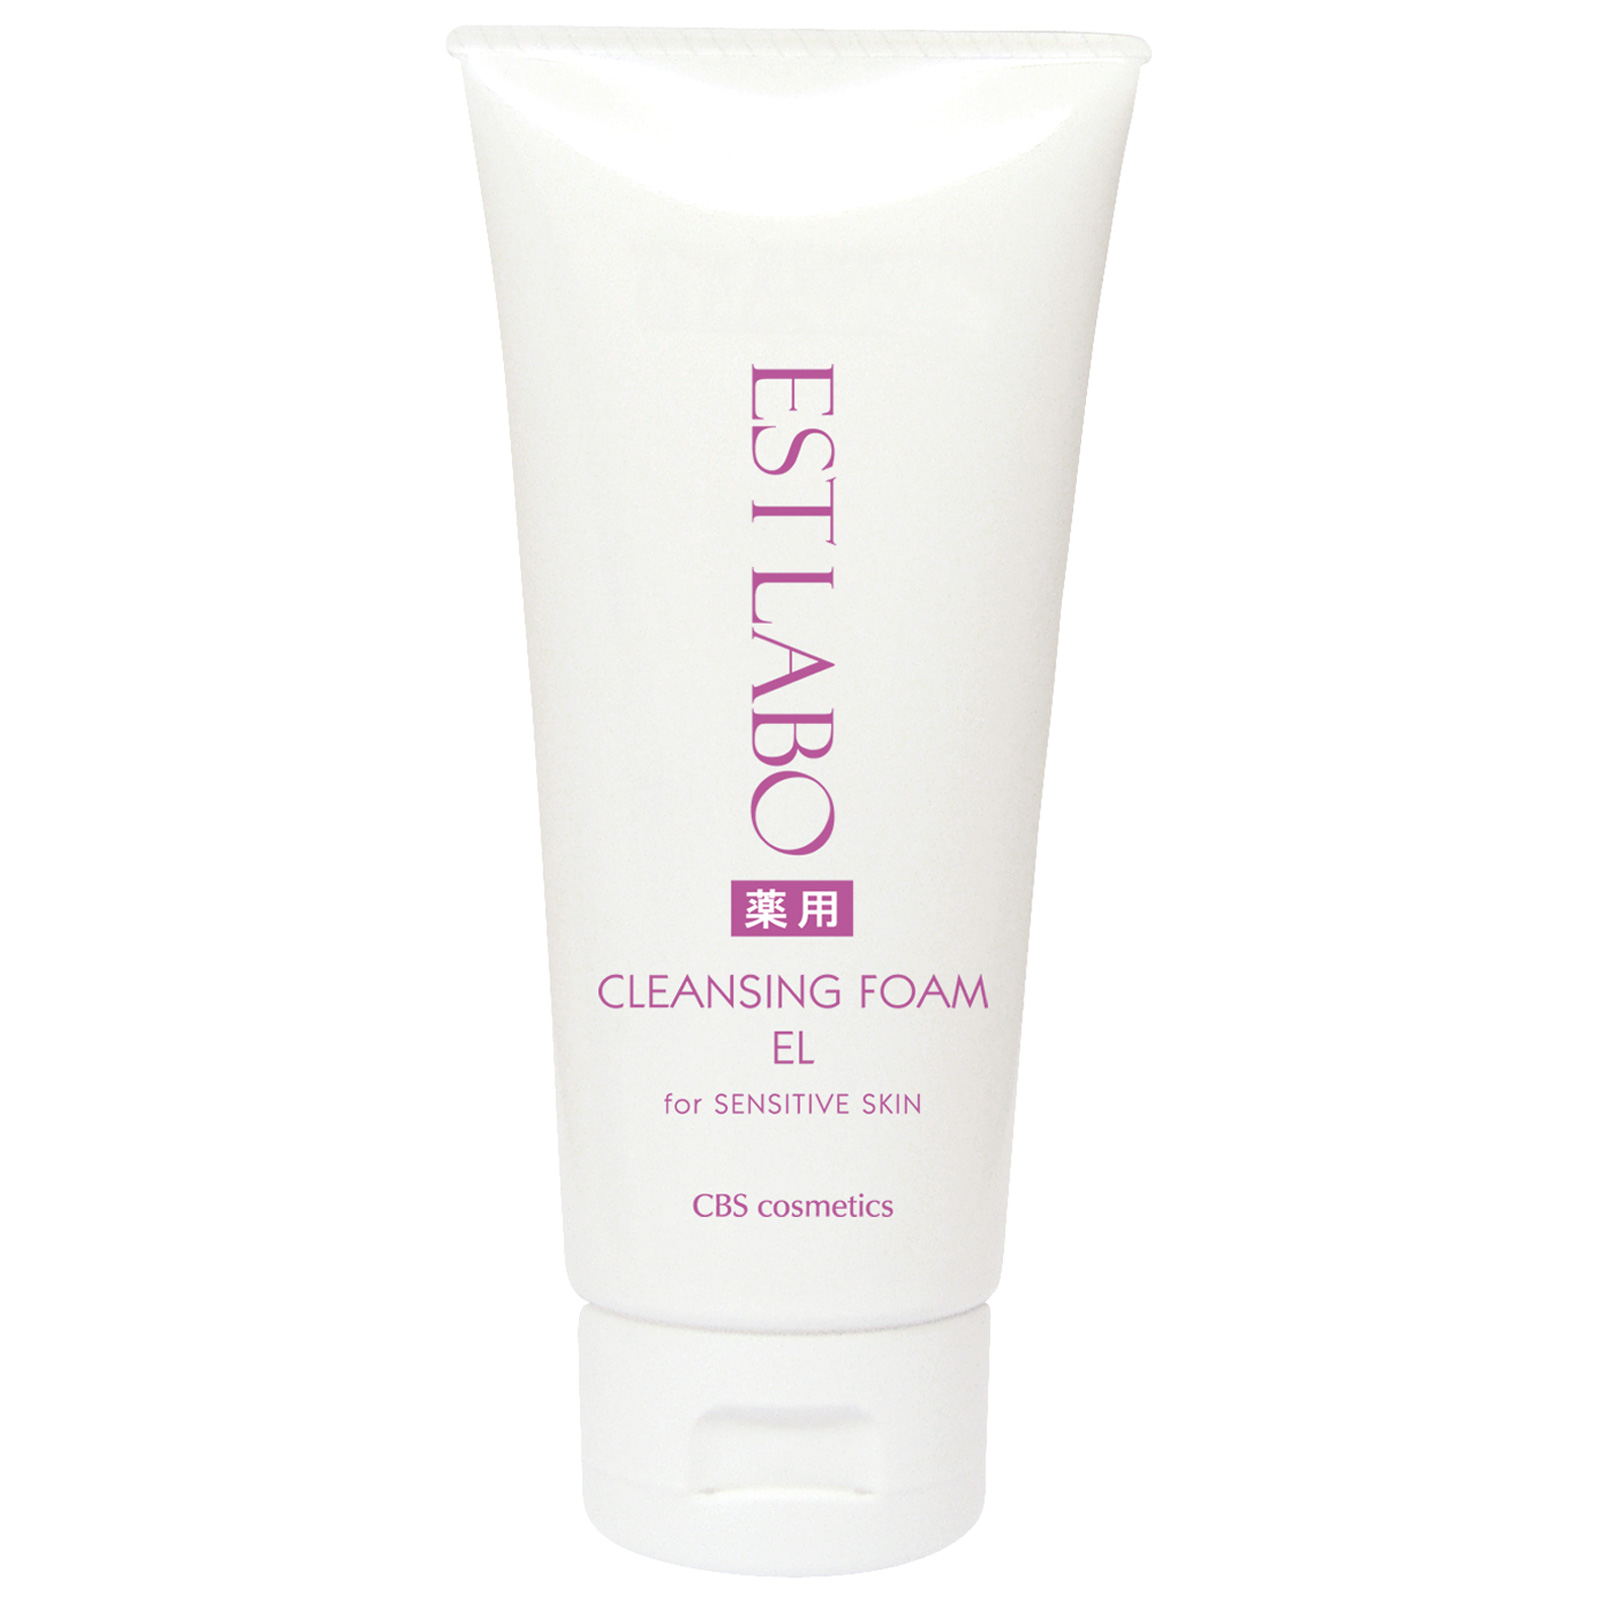 CBS Cosmetics EST LABO Cleansing Foam EL. Очищающая пенка для умывания Эст Лабо Эль, 110 г